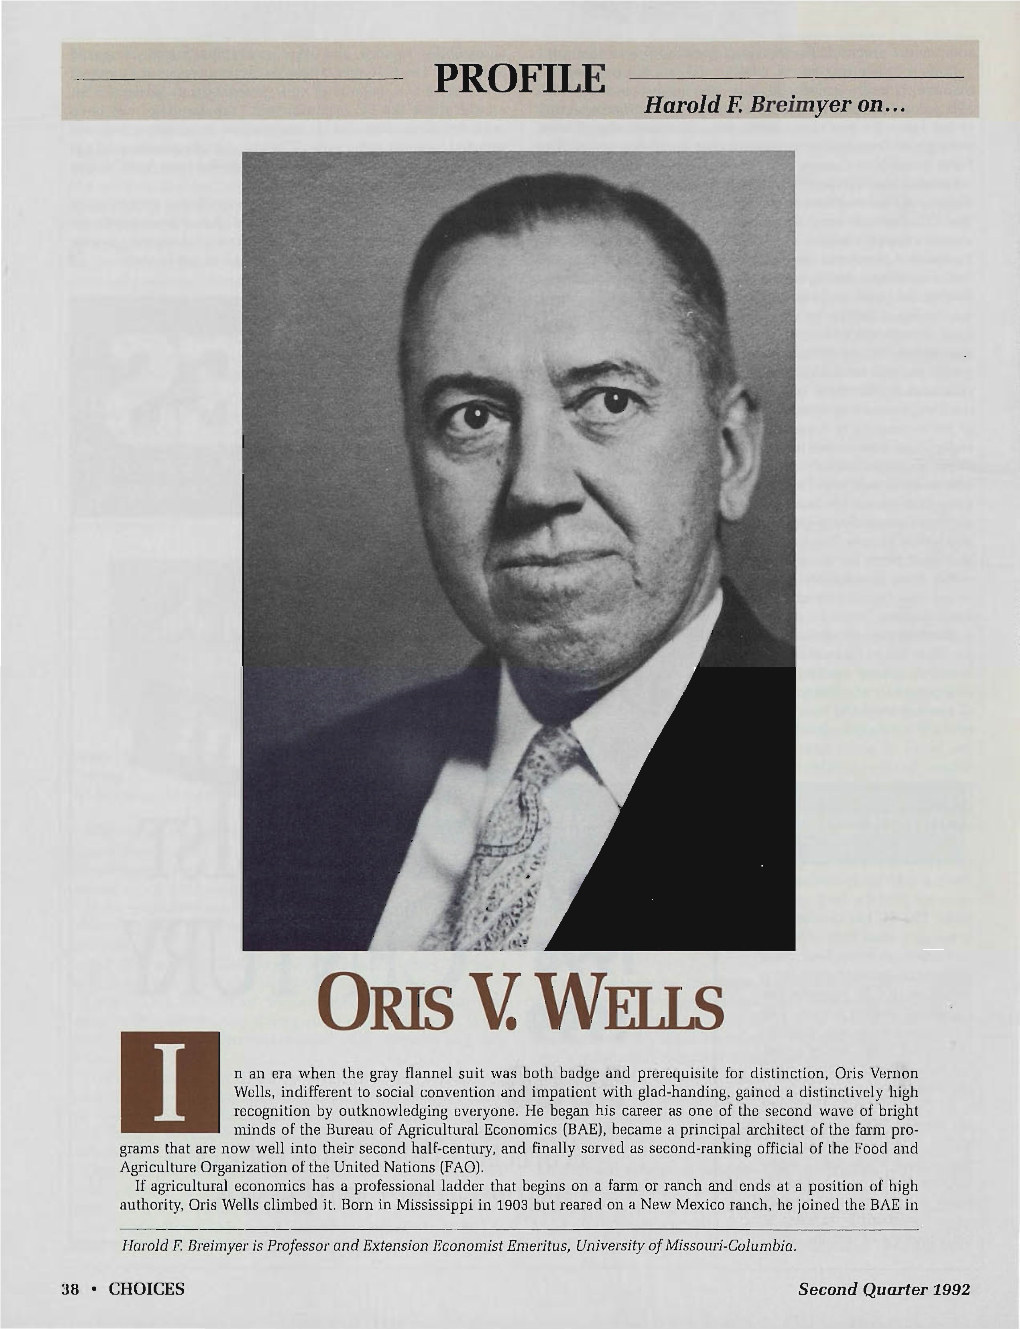 Oris V. Wells